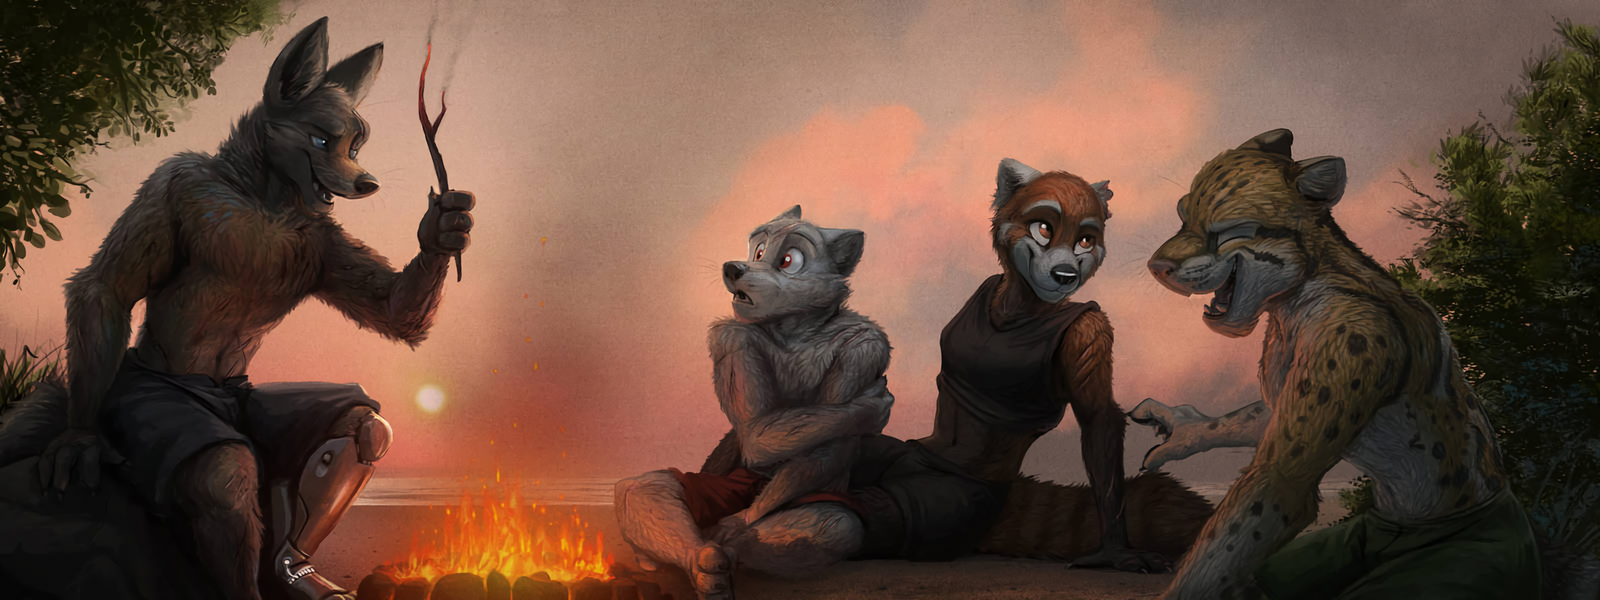 Campfire Stories - Furry, Furry art, Anthro, Furry canine, Furry feline, Furry Panda, Life stories, Temiree, Furry red panda